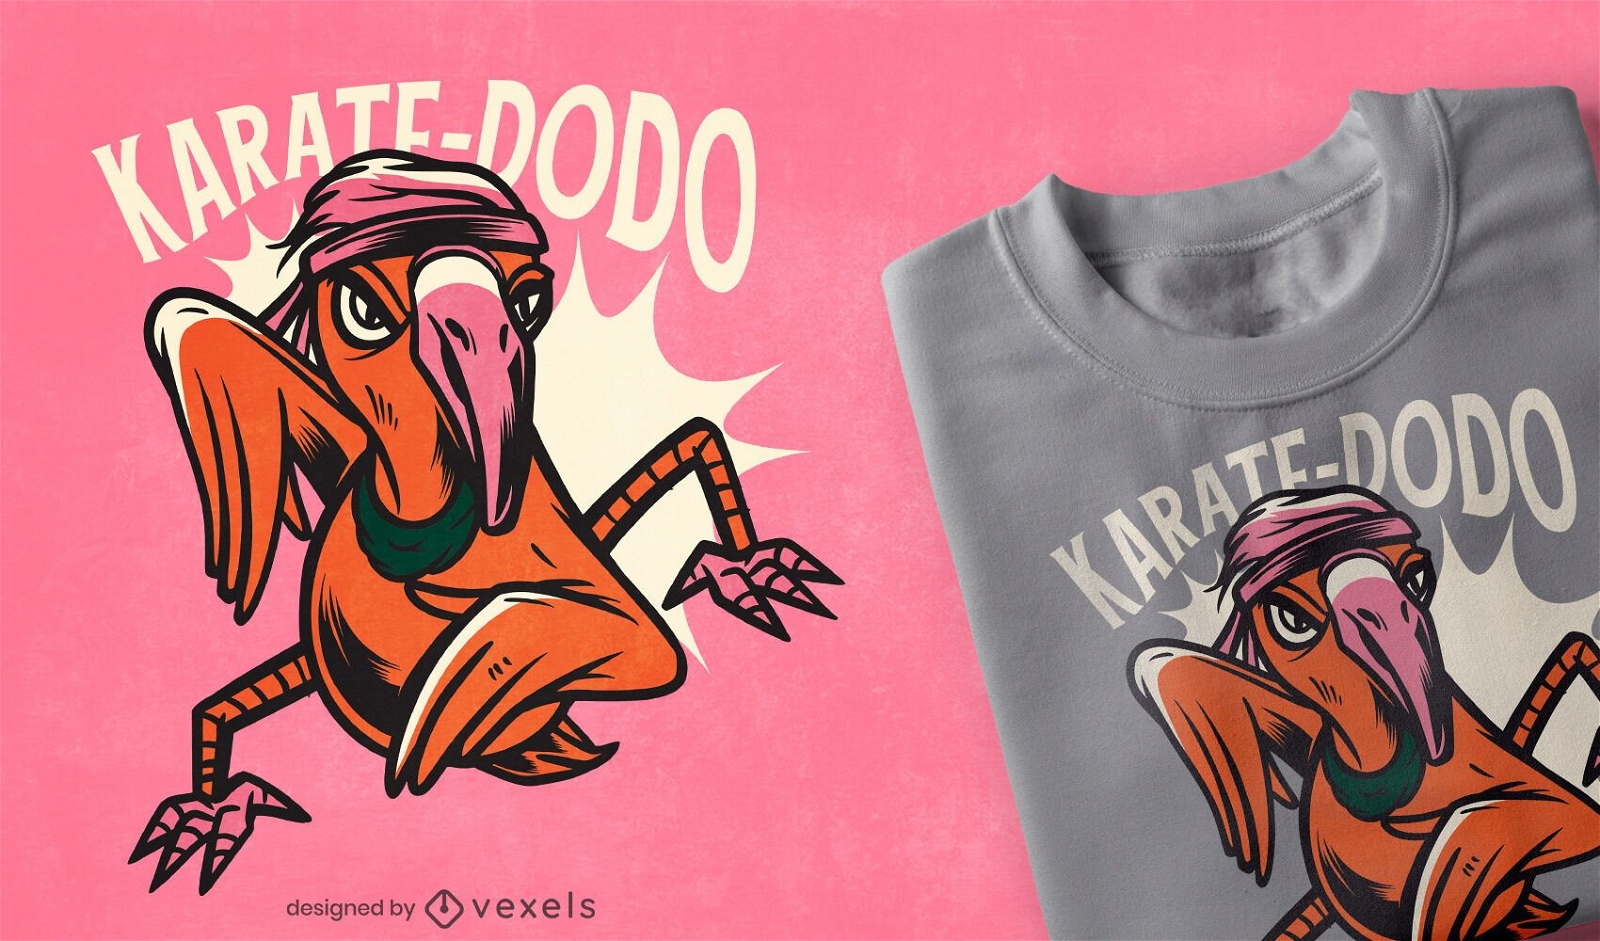 Design de camiseta Karat? dodo